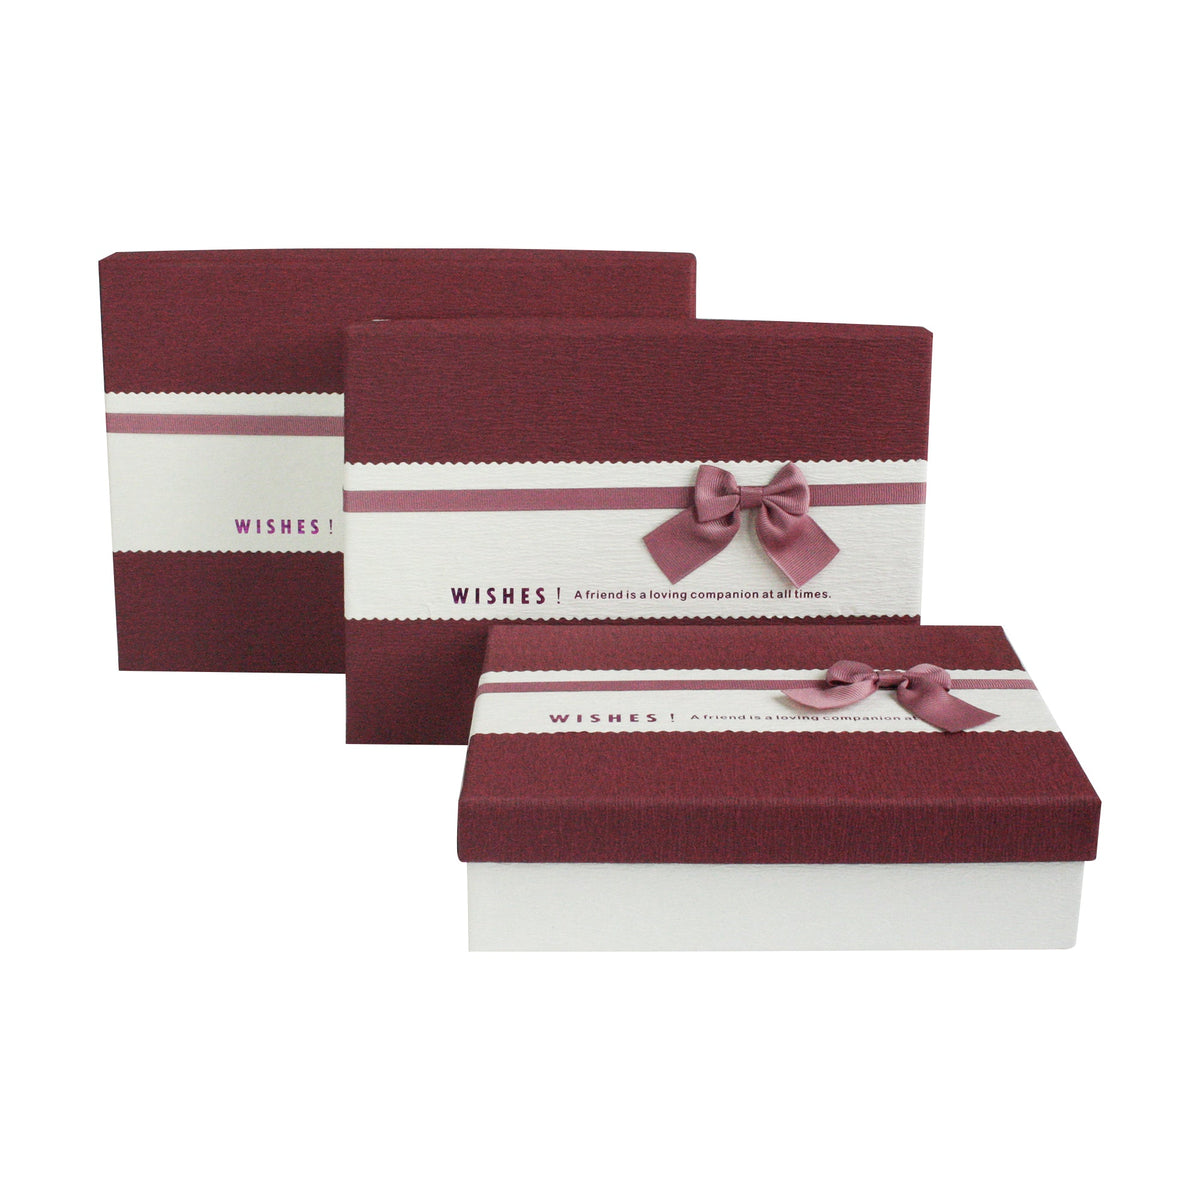 Luxury Cream/Maroon Gift Boxes - Set of 3